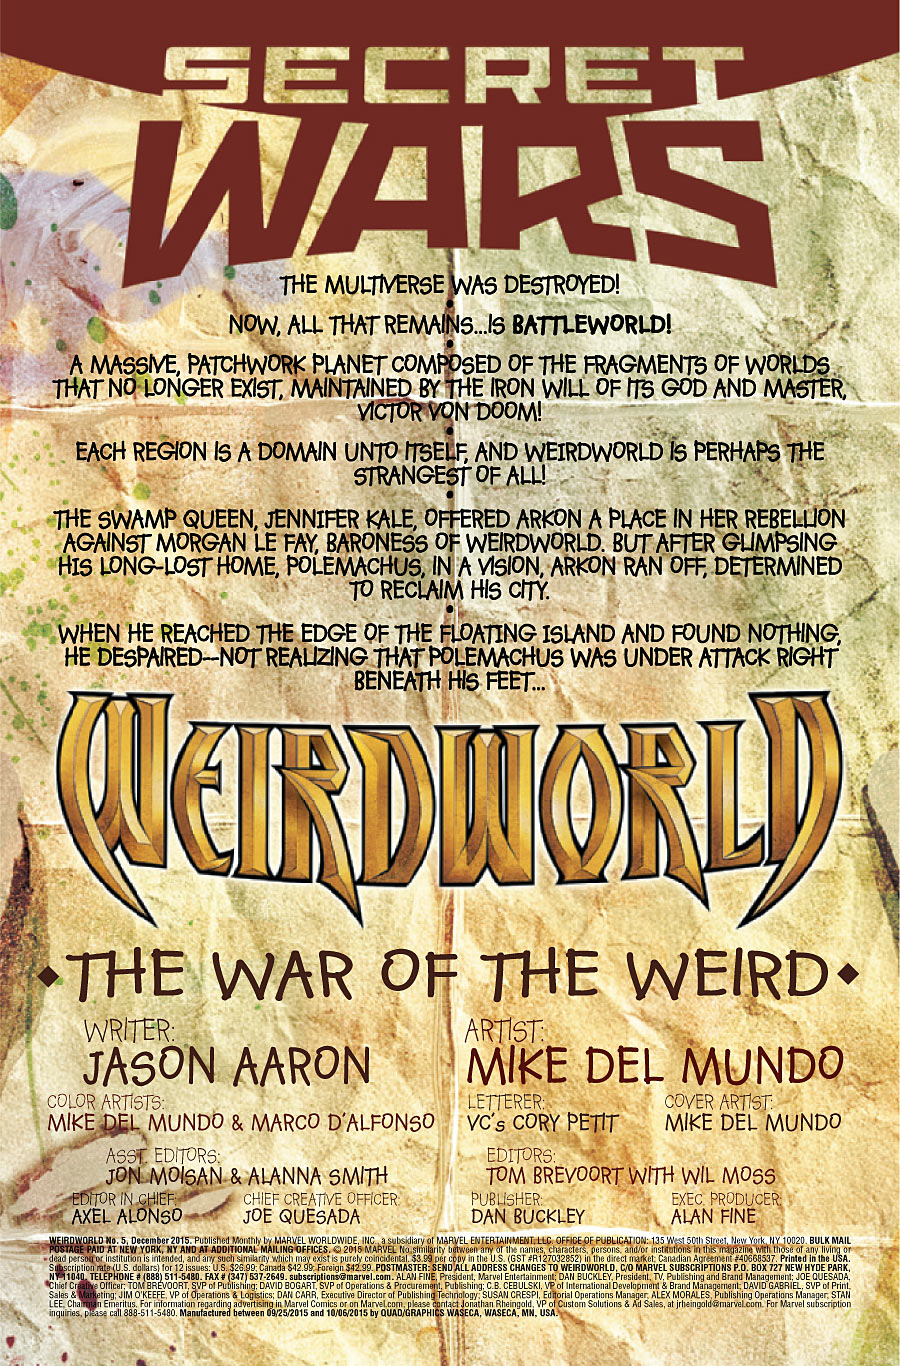 Weirdworld #5